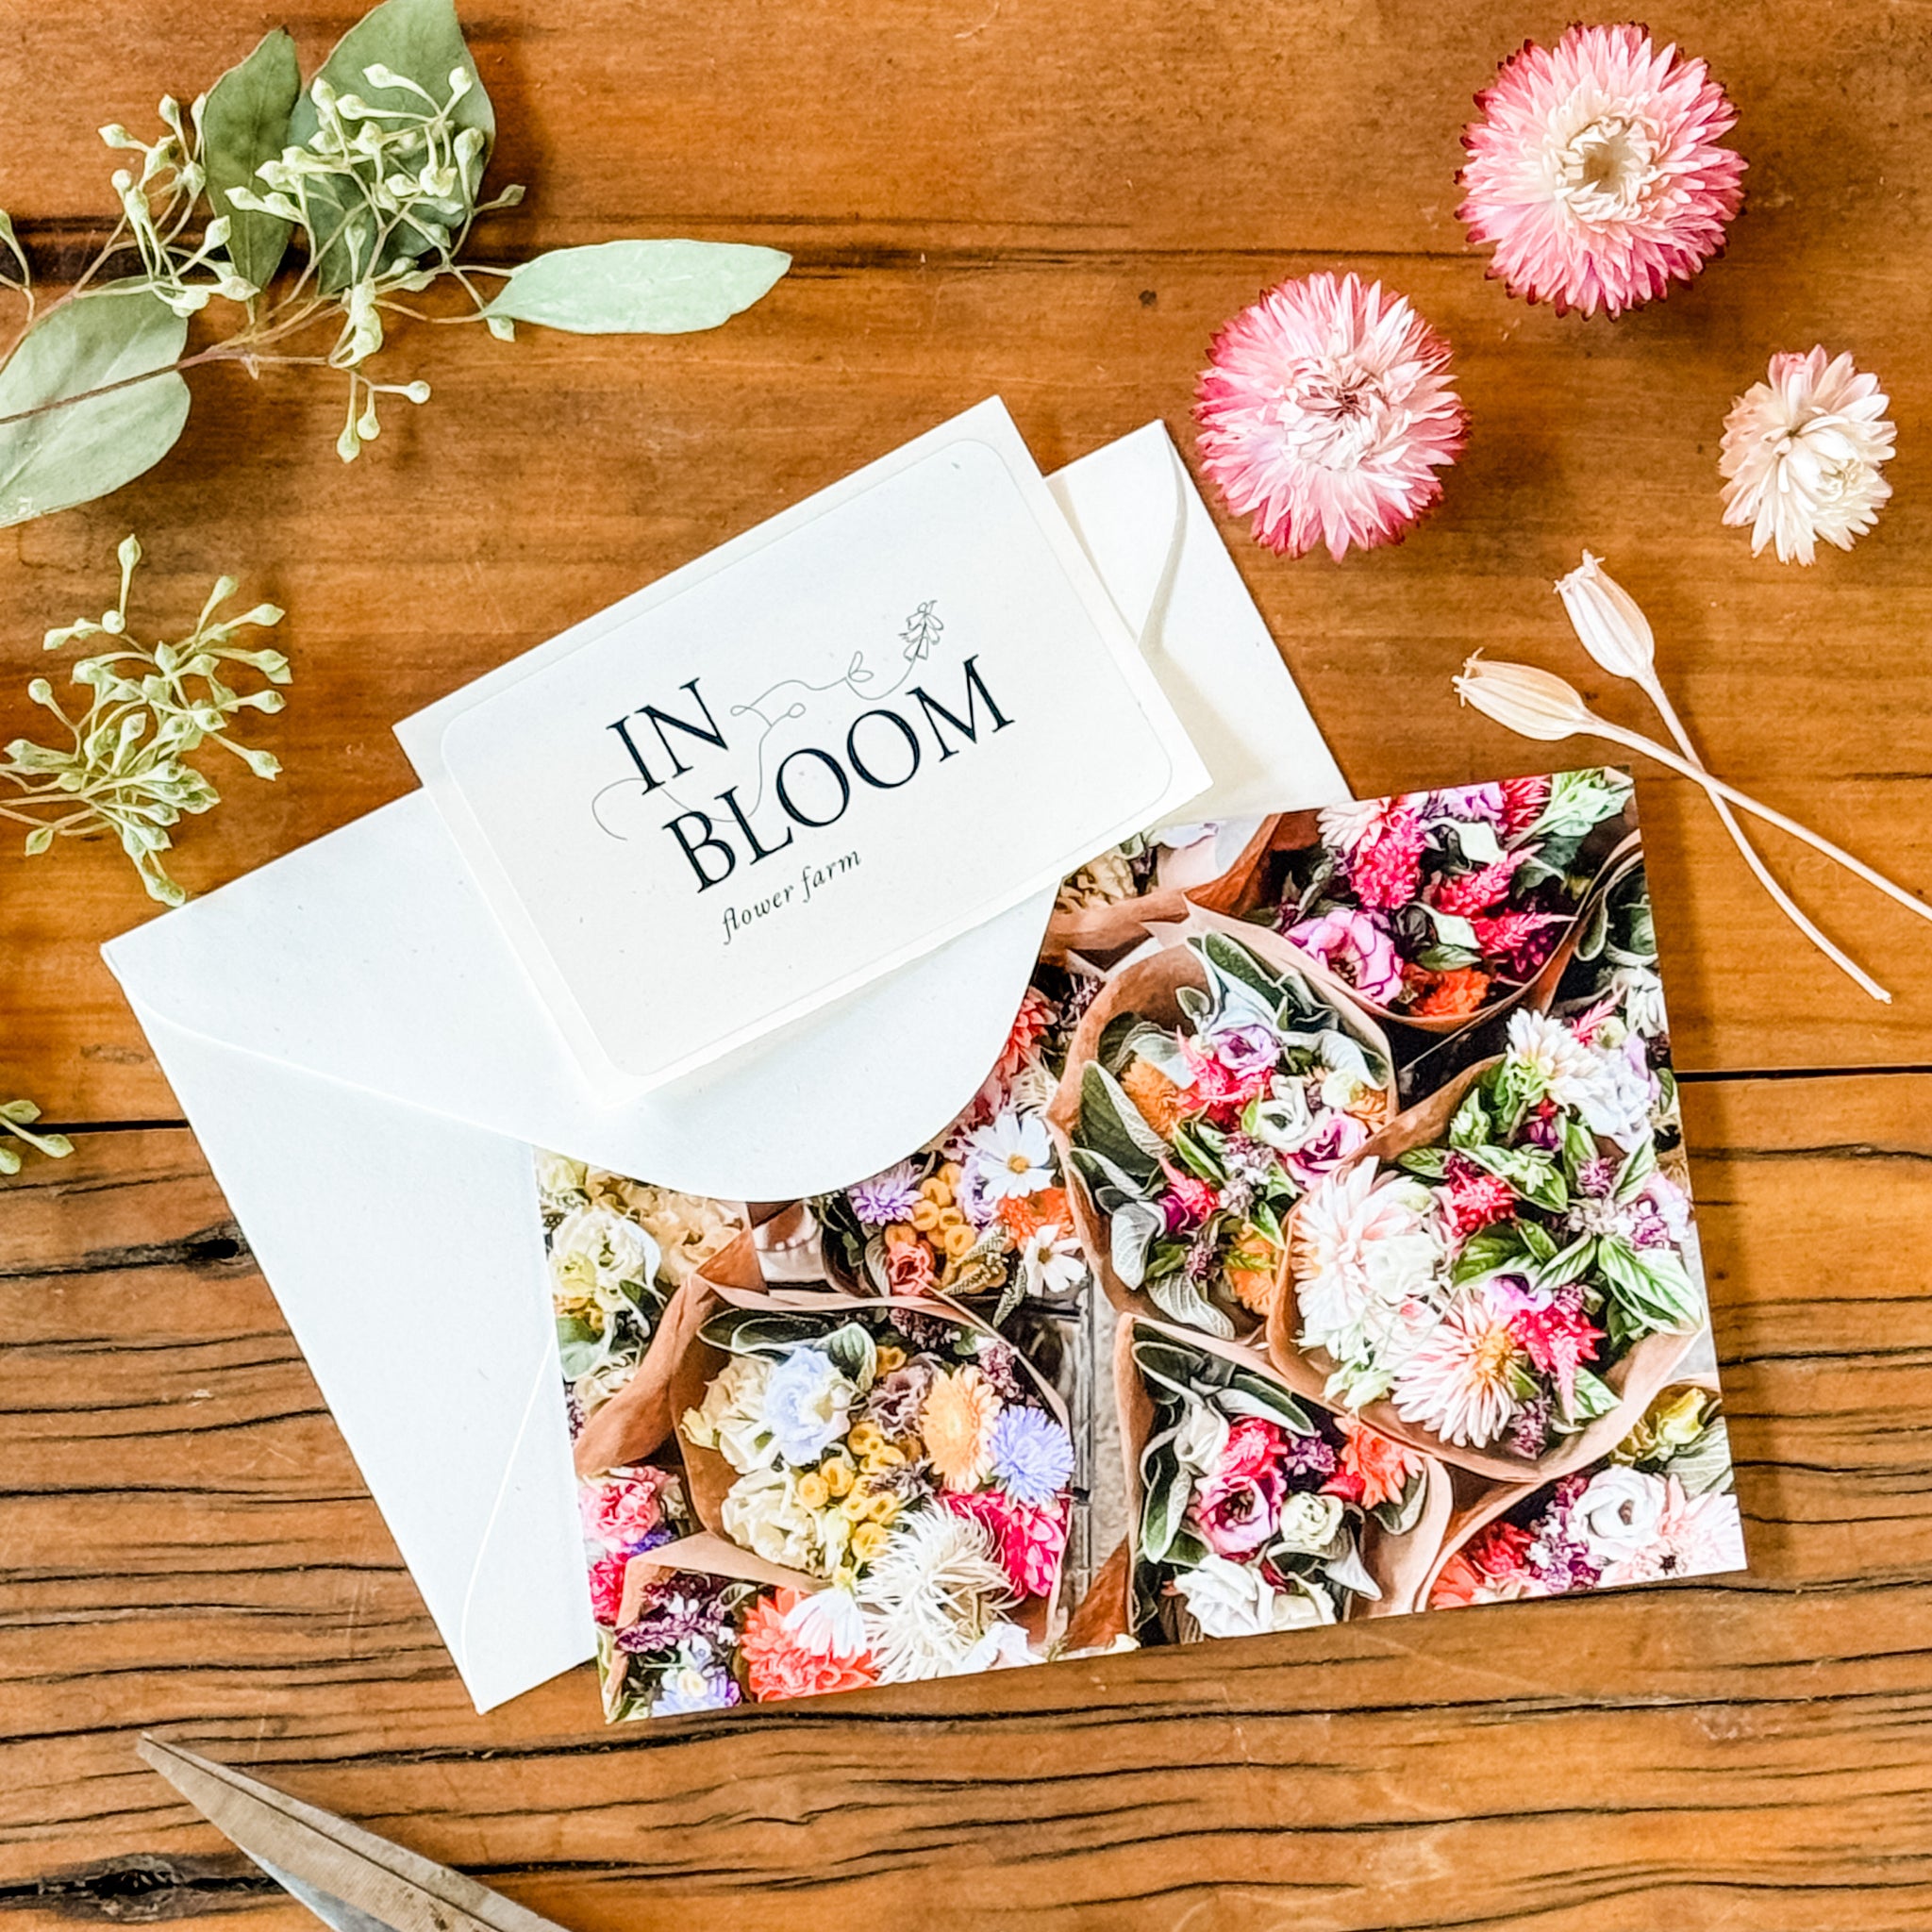 In Bloom Flower Farm Gift Card